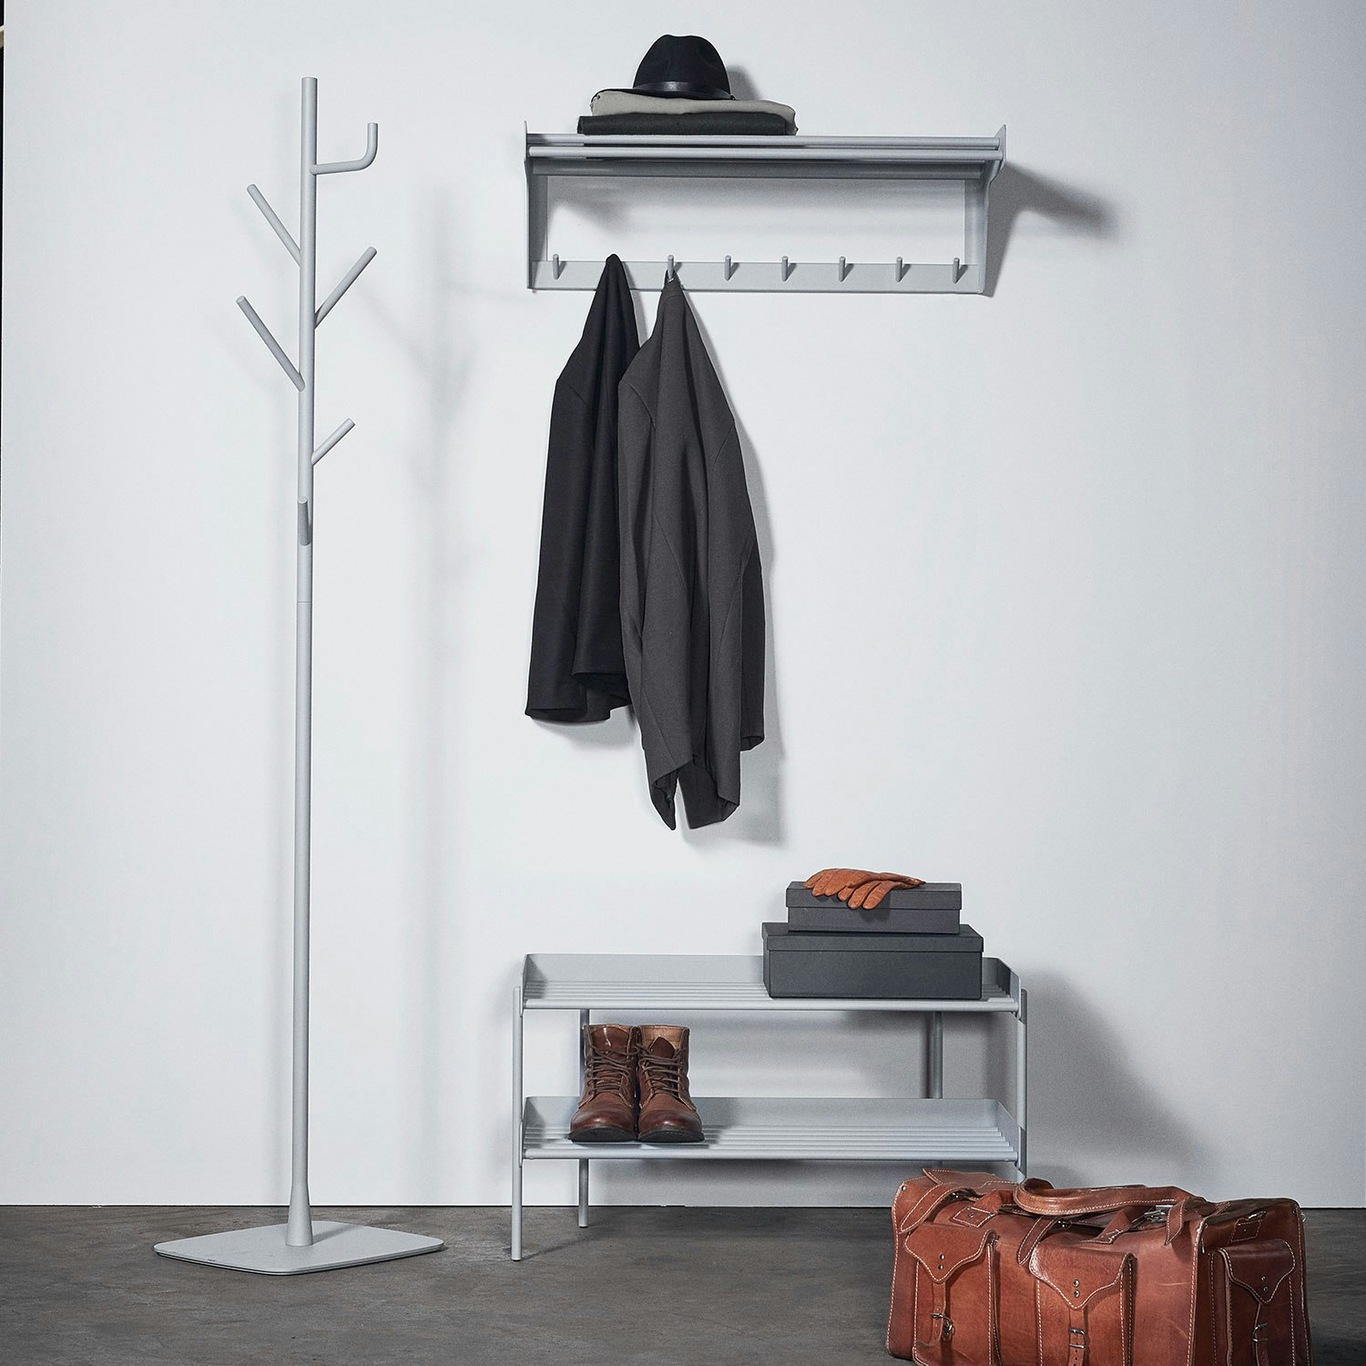 https://royaldesign.com/image/2/smd-design-alfred-shoe-rack-extension-section-light-grey-2?w=800&quality=80